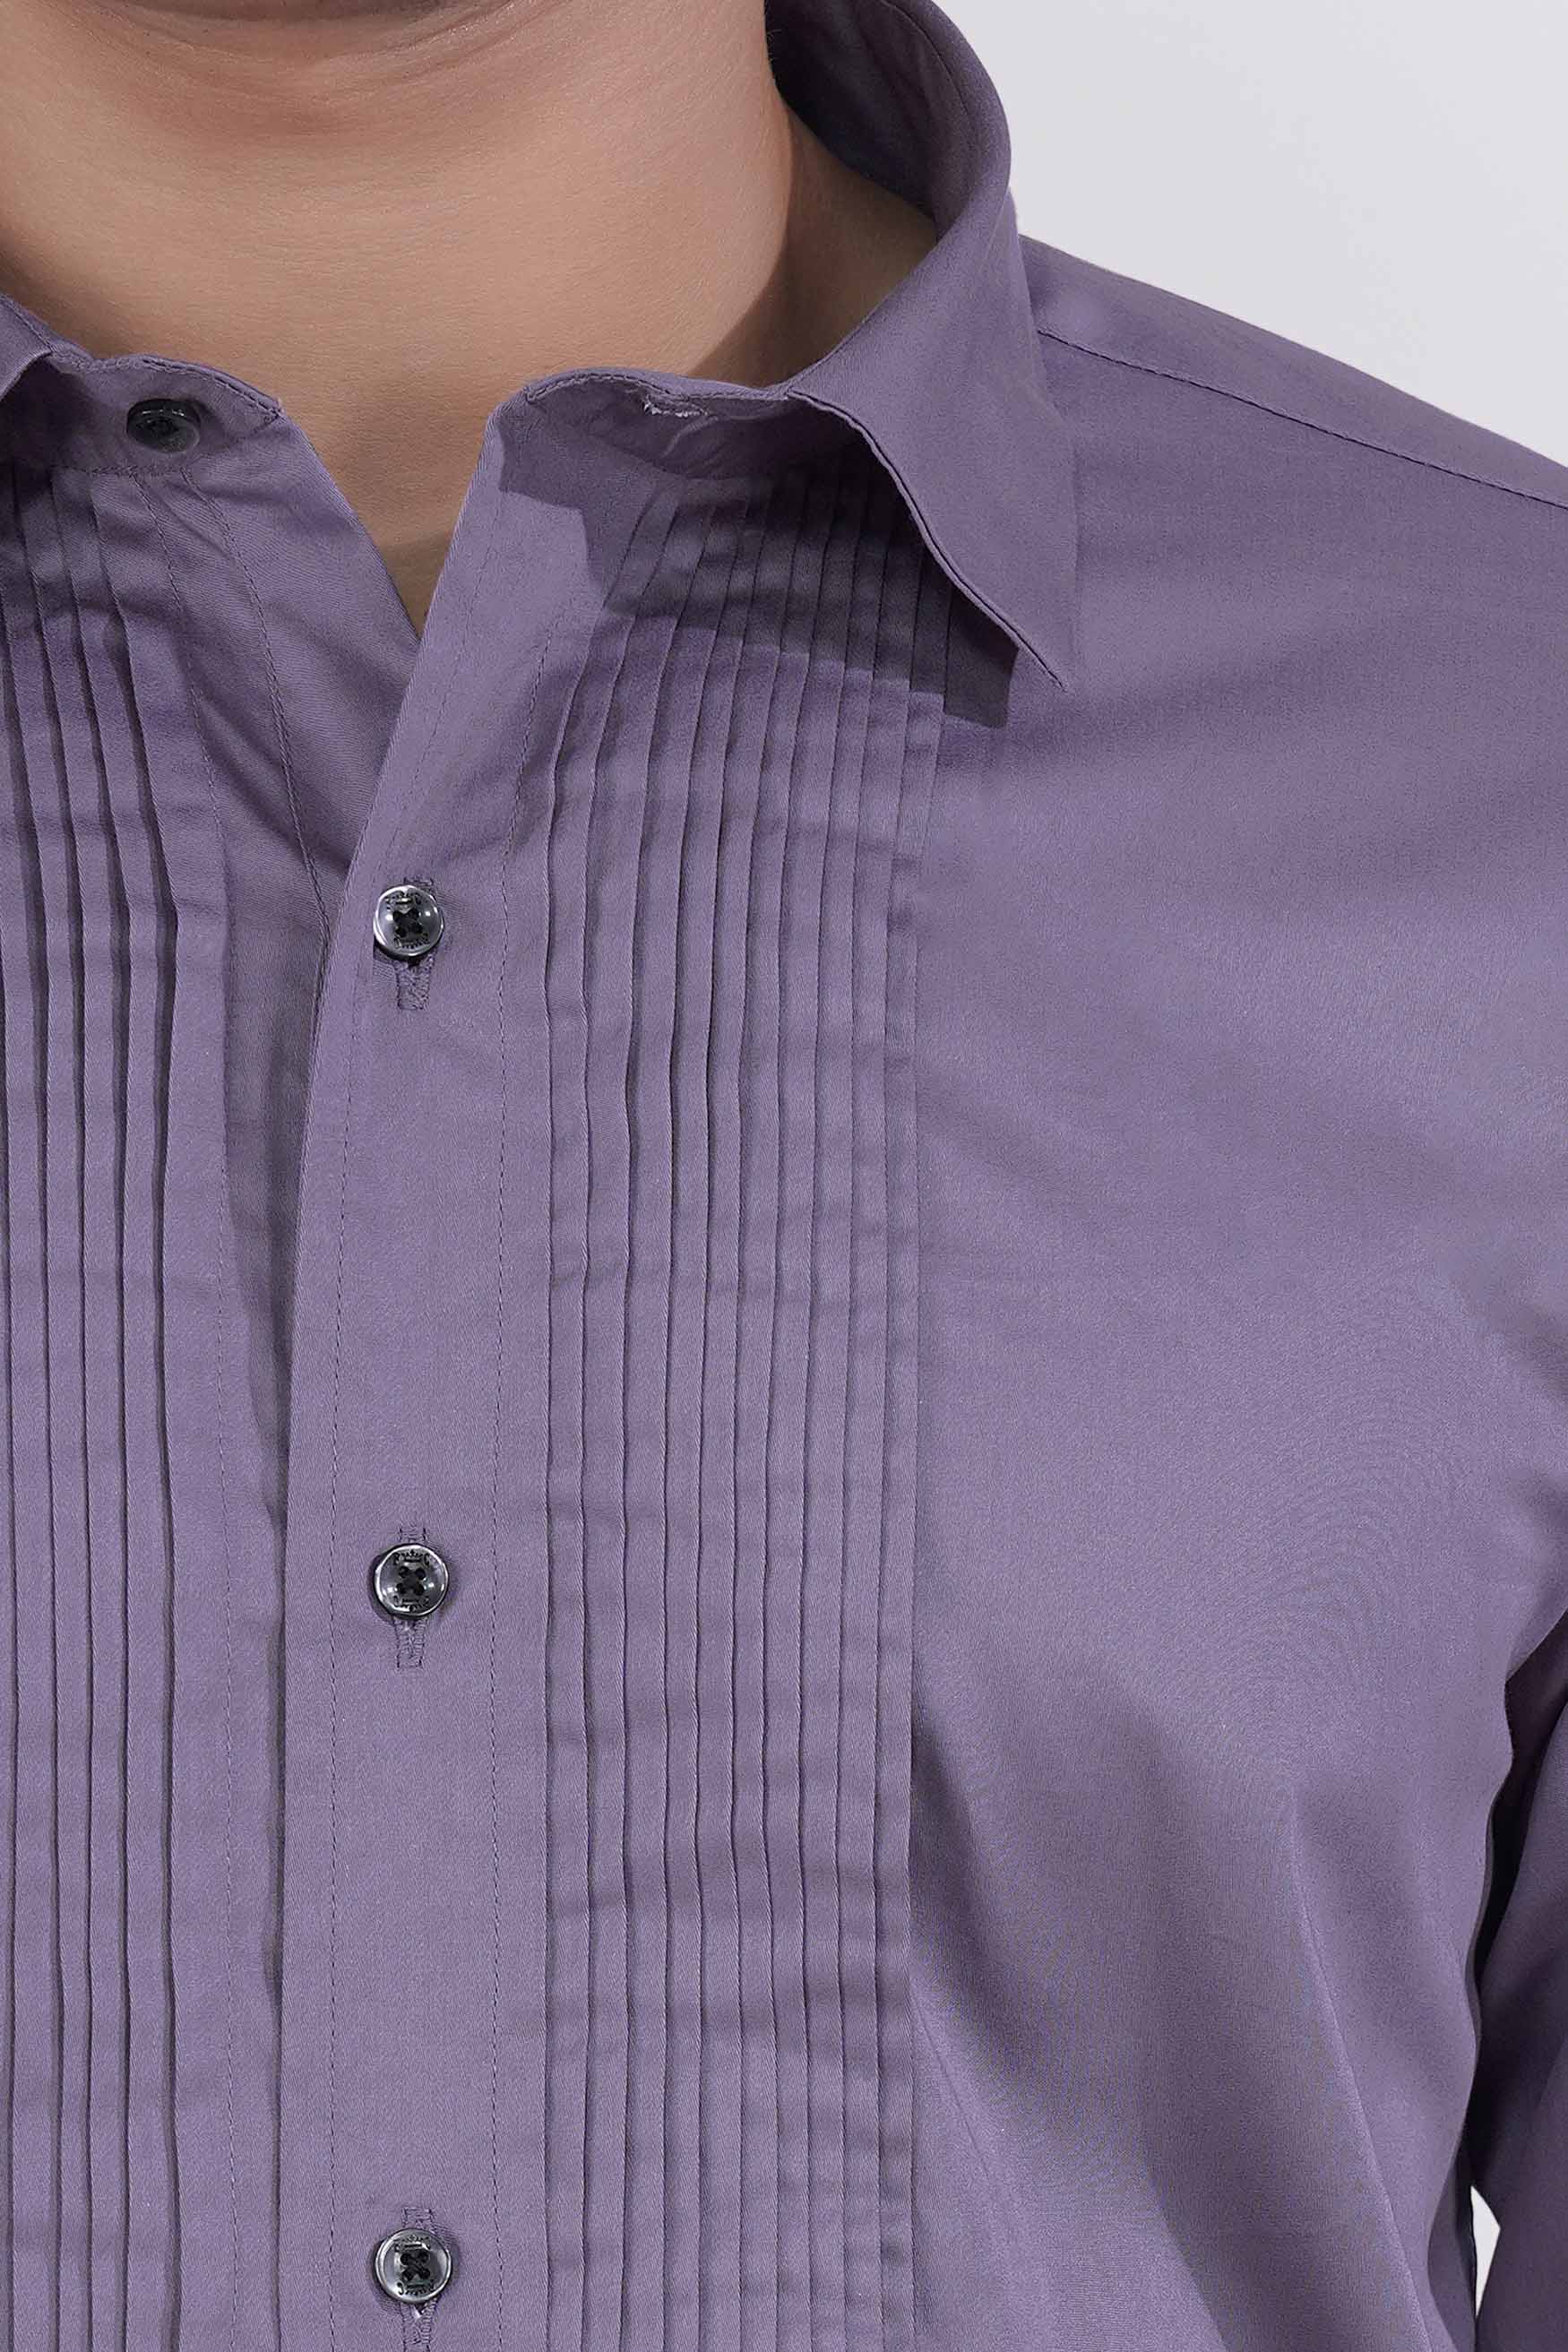 Amethyst Smoke Lavender Subtle Sheen Super Soft Premium Cotton Tuxedo Shirt